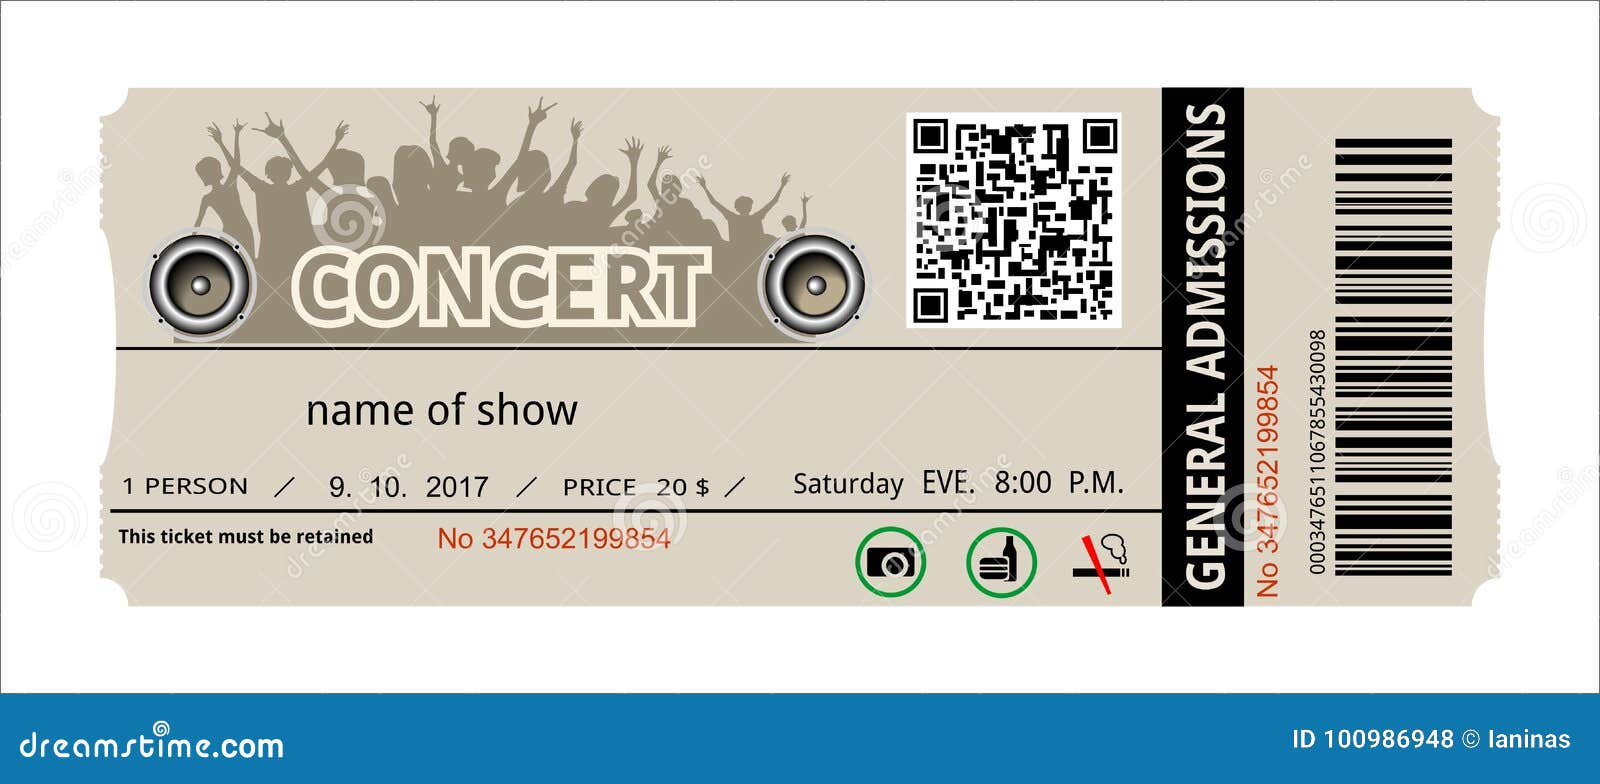 Tickets концерт. Макет билета на концерт. Билет на концерт рисунок. Макет концертных билетов. Концертный билет шаблон.